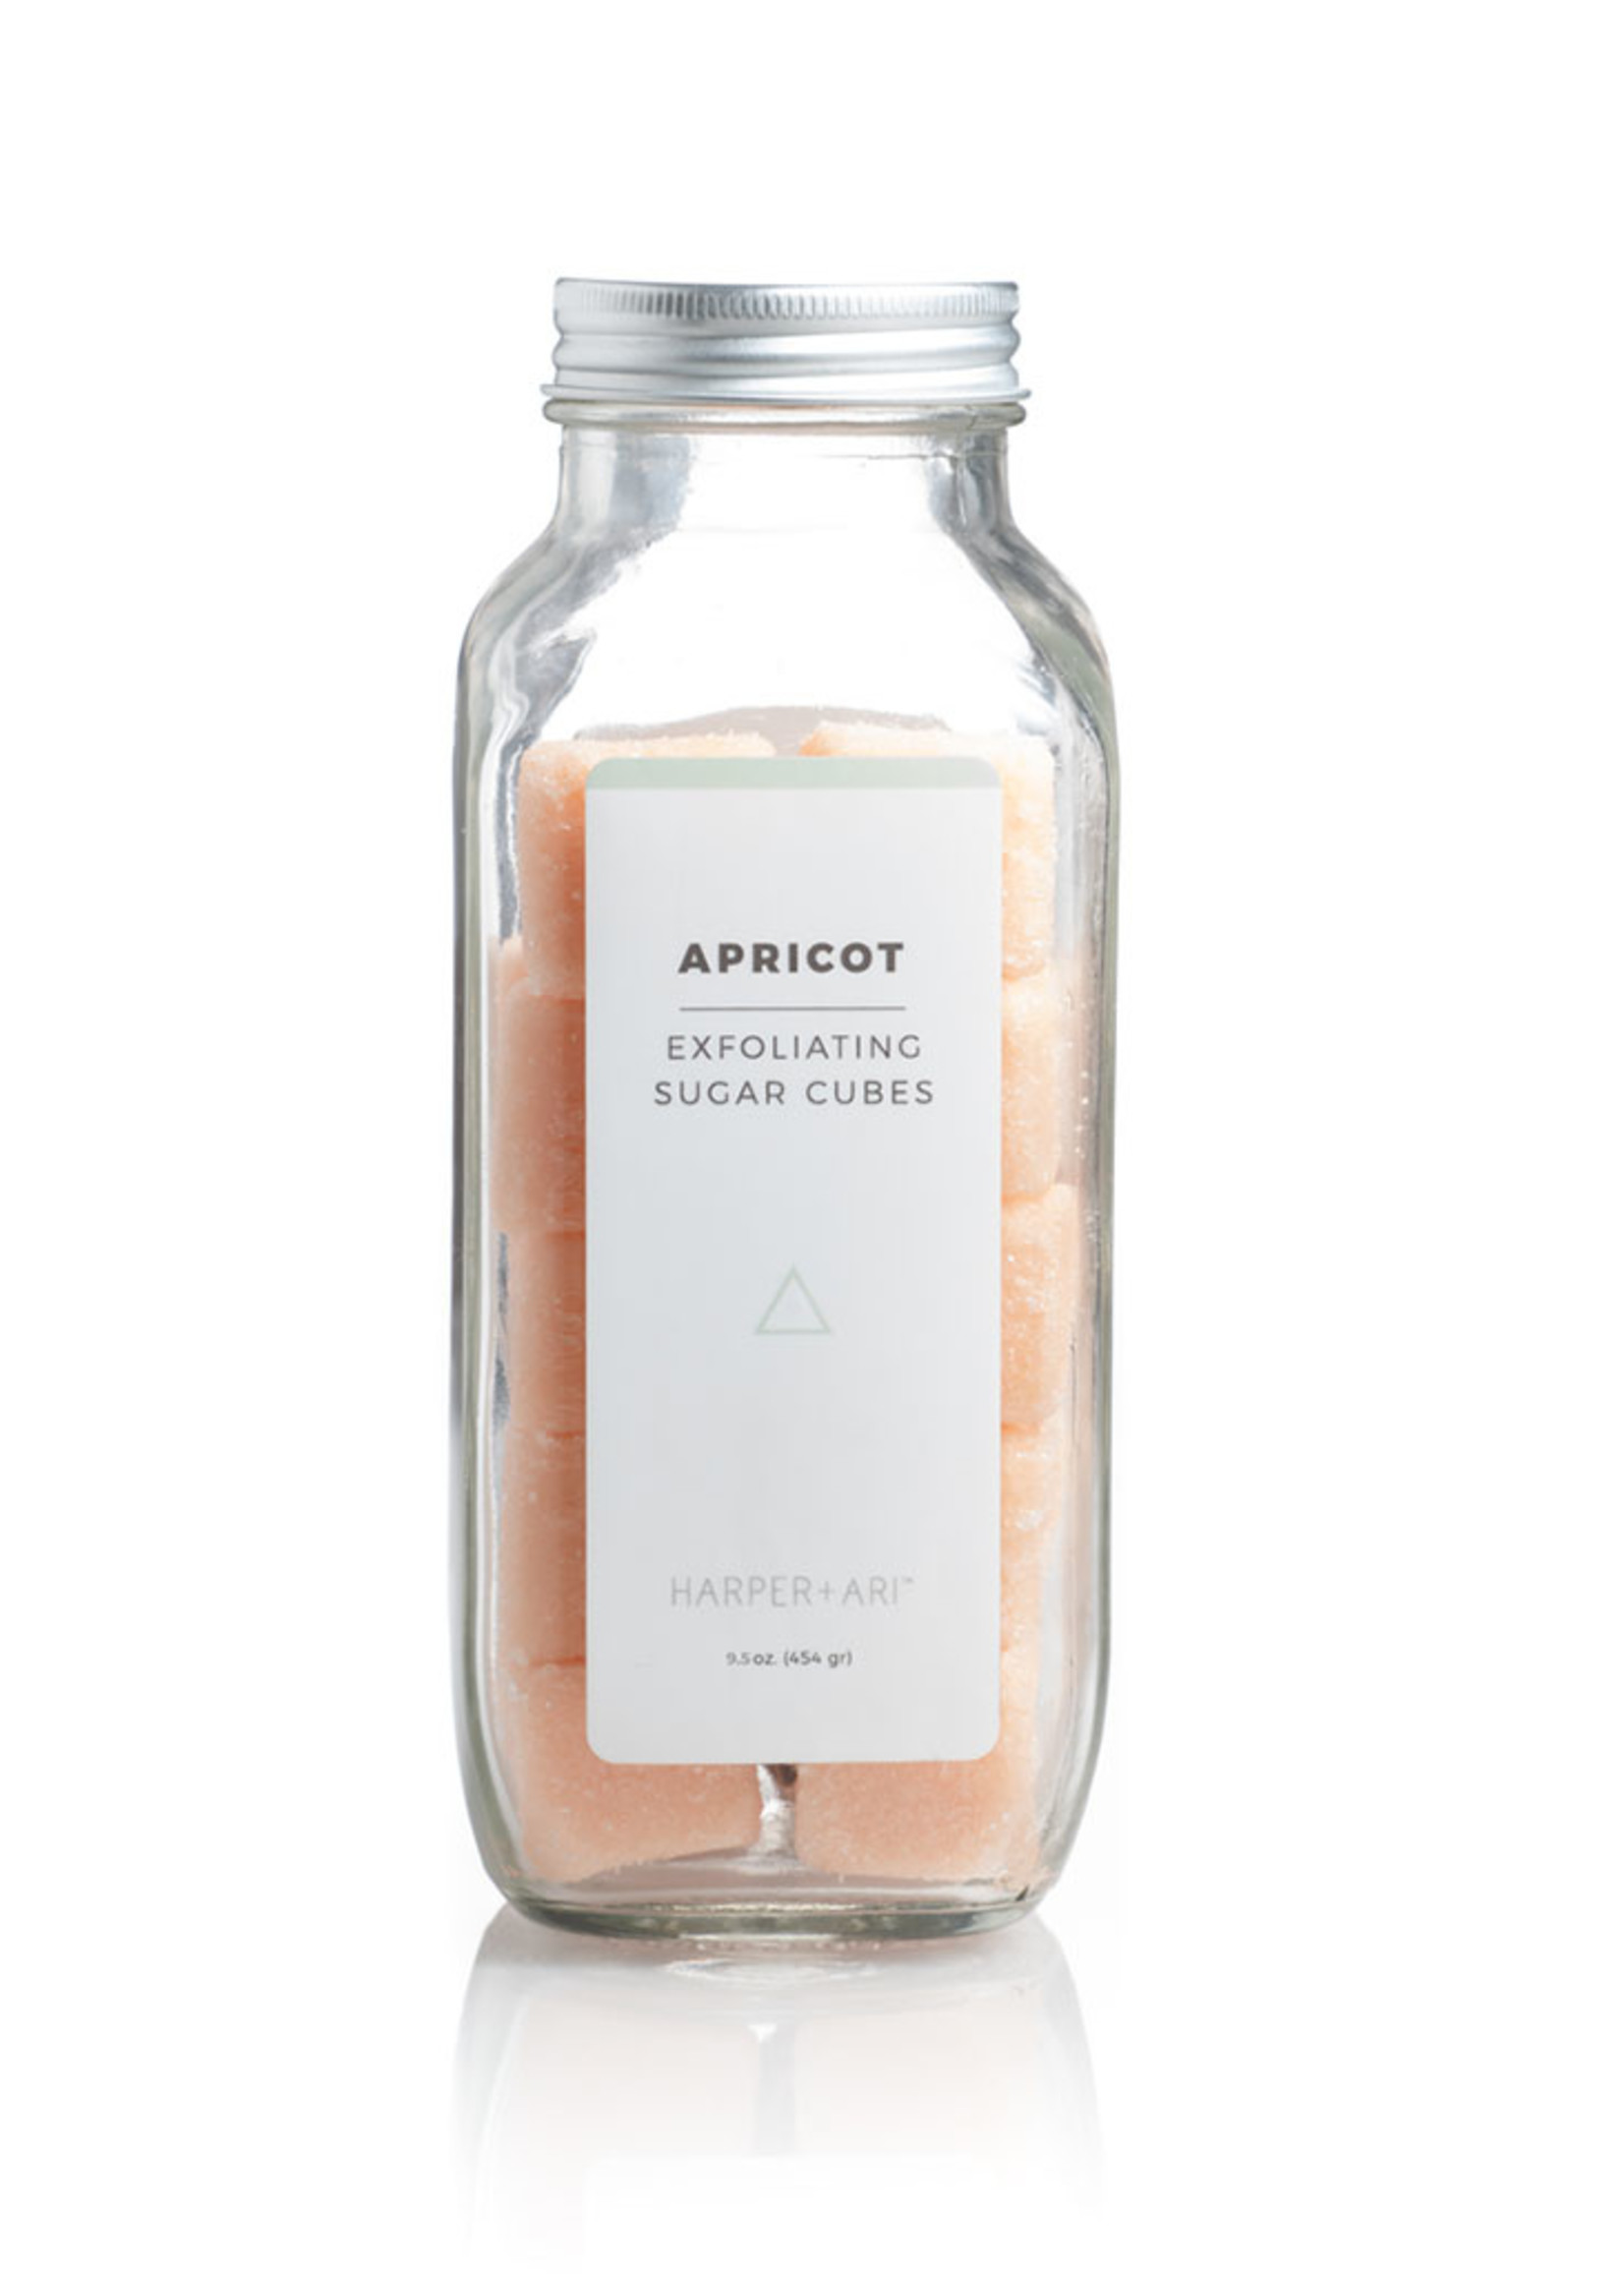 Harper + Ari Harper + Ari Apricot Exfloiating Sugar Cubes 9.5oz